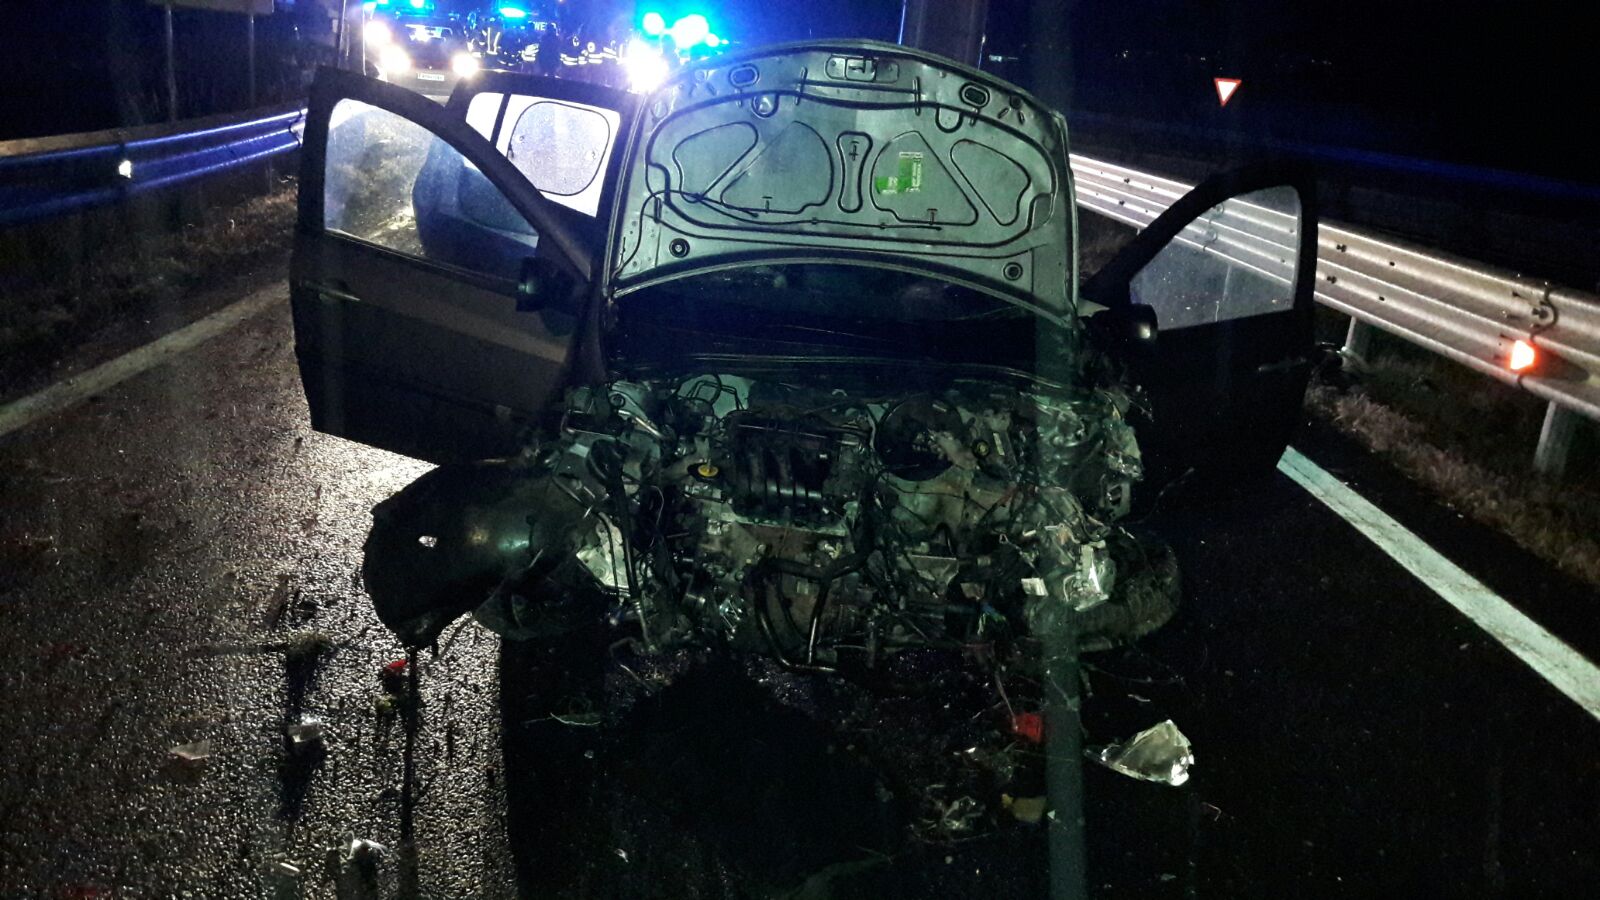 26.11.2016 - EINSATZ: Schwerer Verkehrsunfall auf der A7 